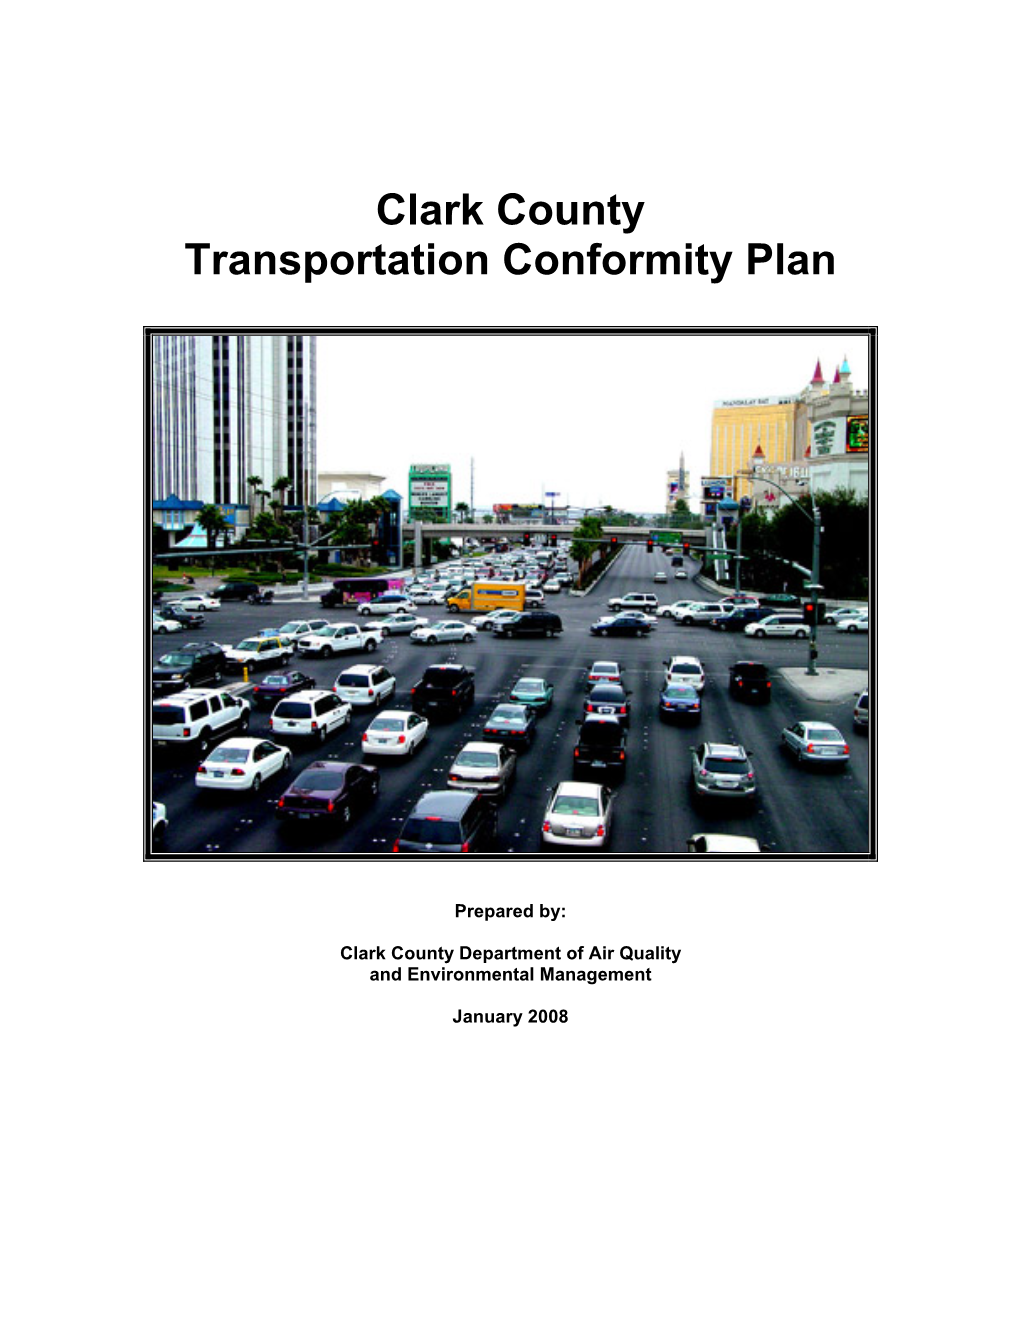 Clark County Transportation Conformity Plan